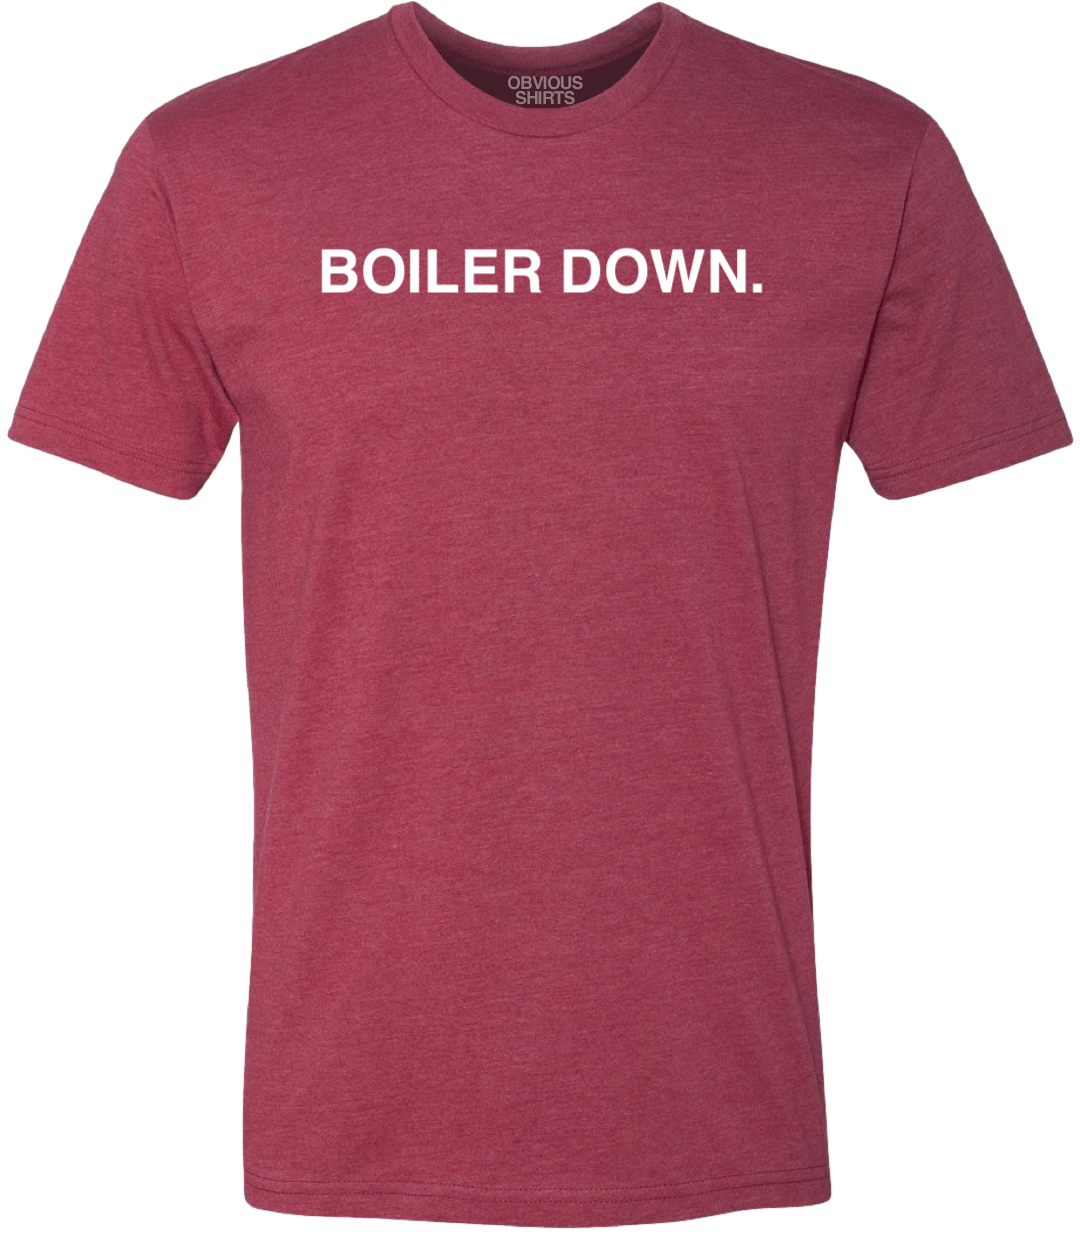 BOILER DOWN. - OBVIOUS SHIRTS